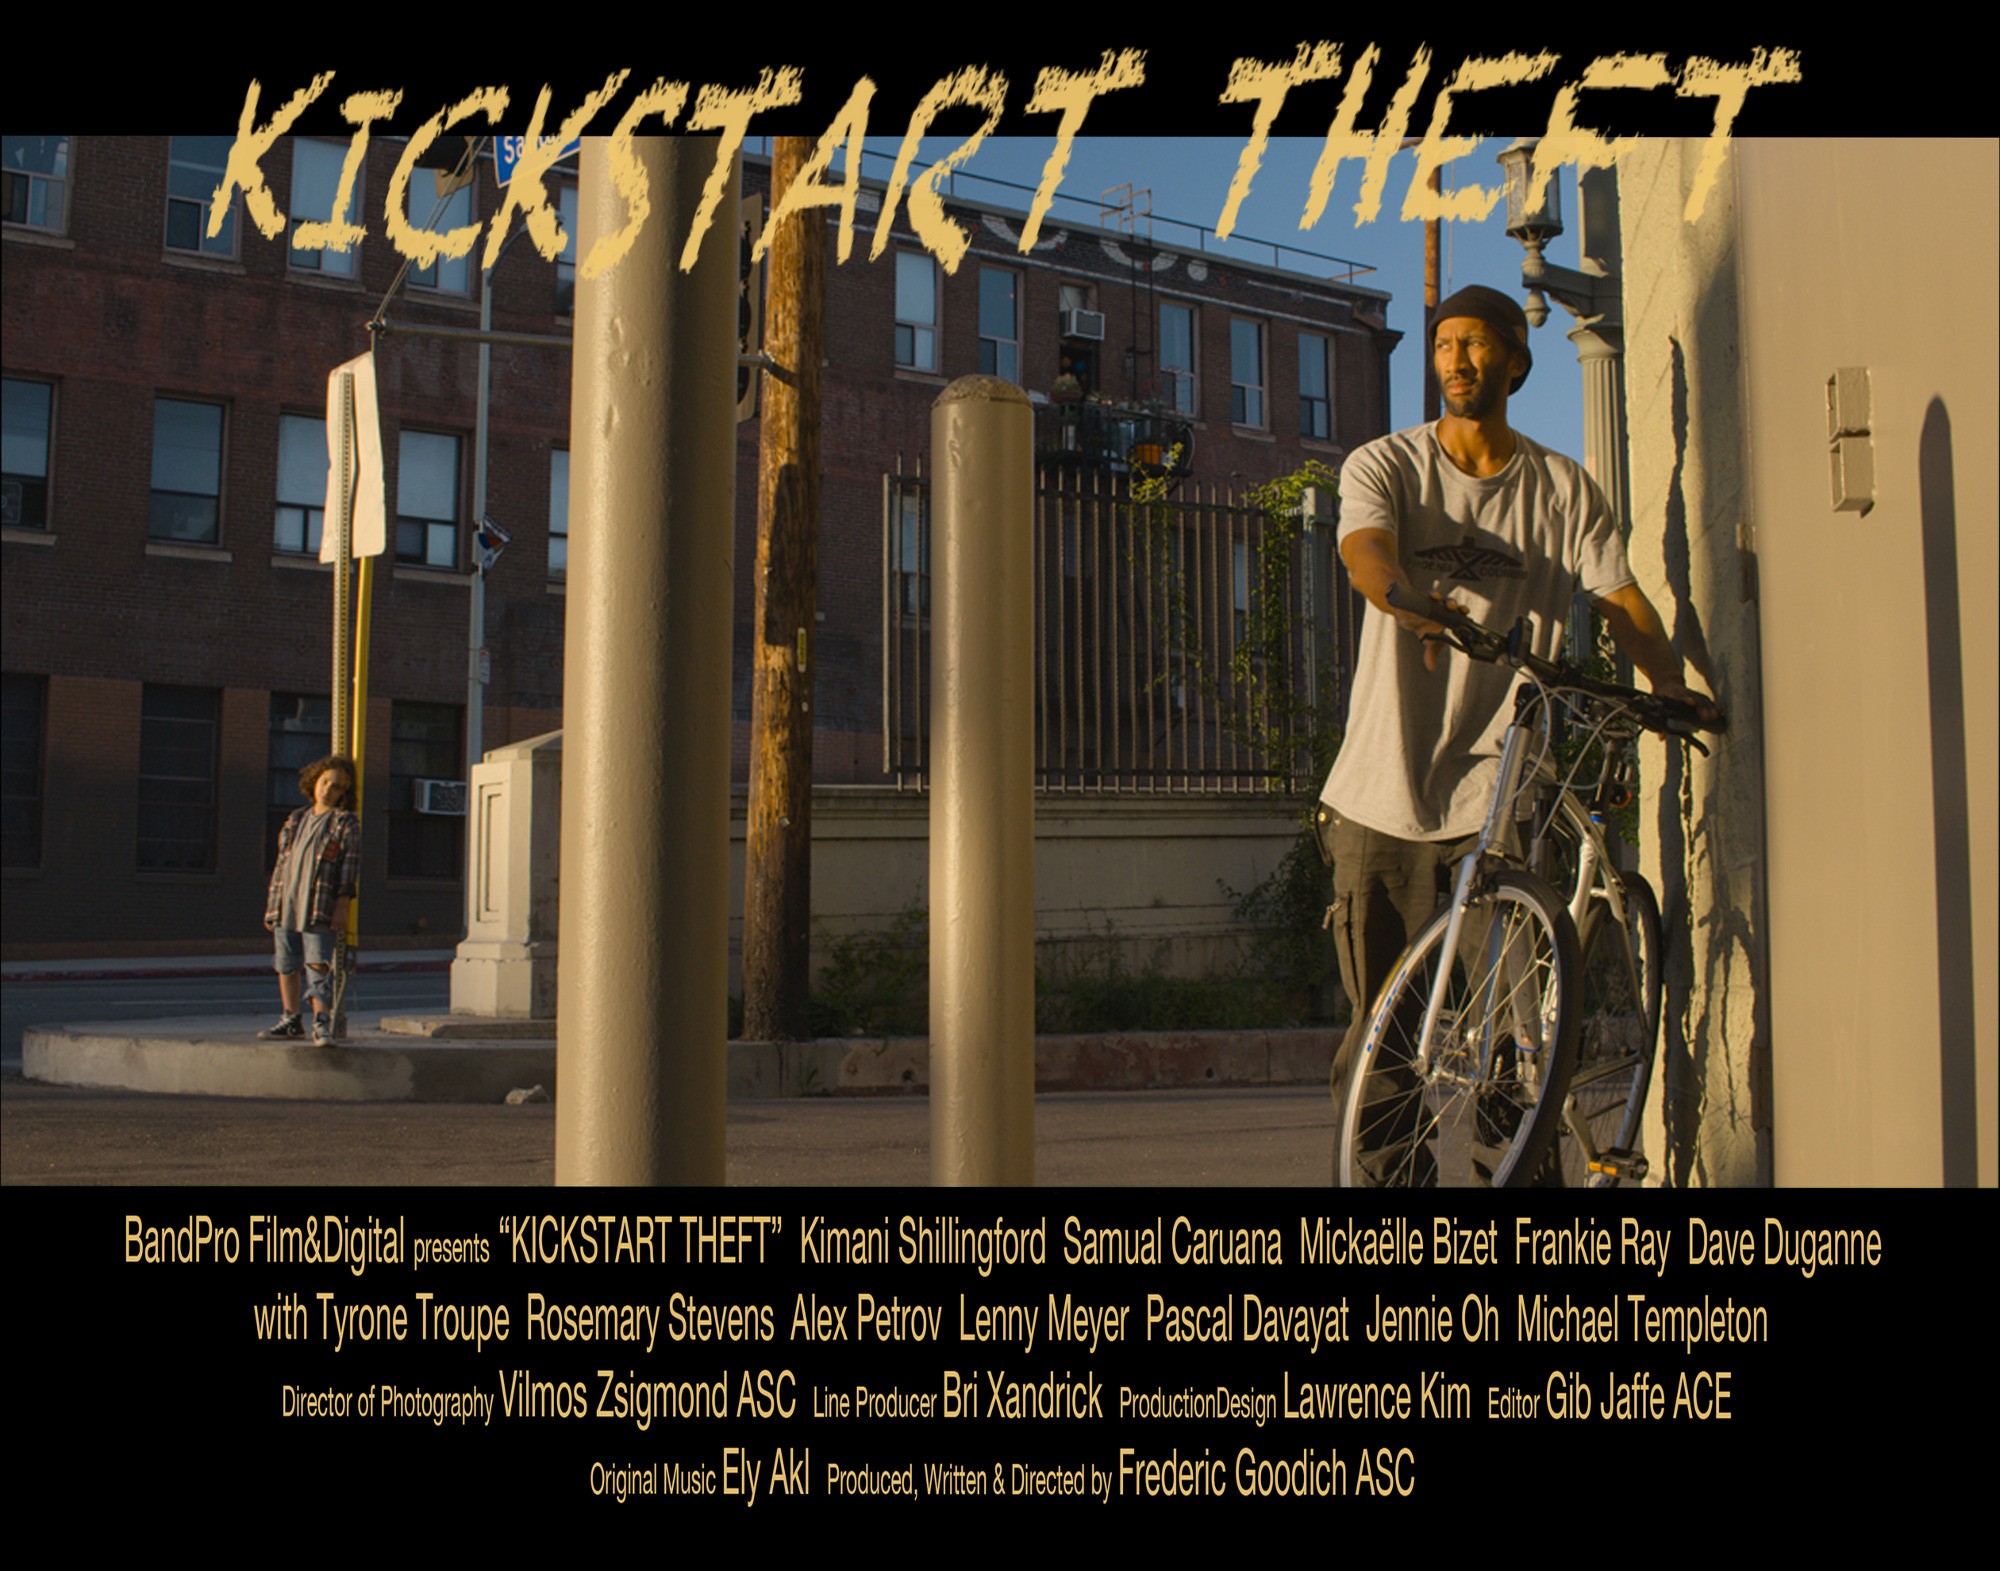 Mega Sized Movie Poster Image for Kickstart Theft